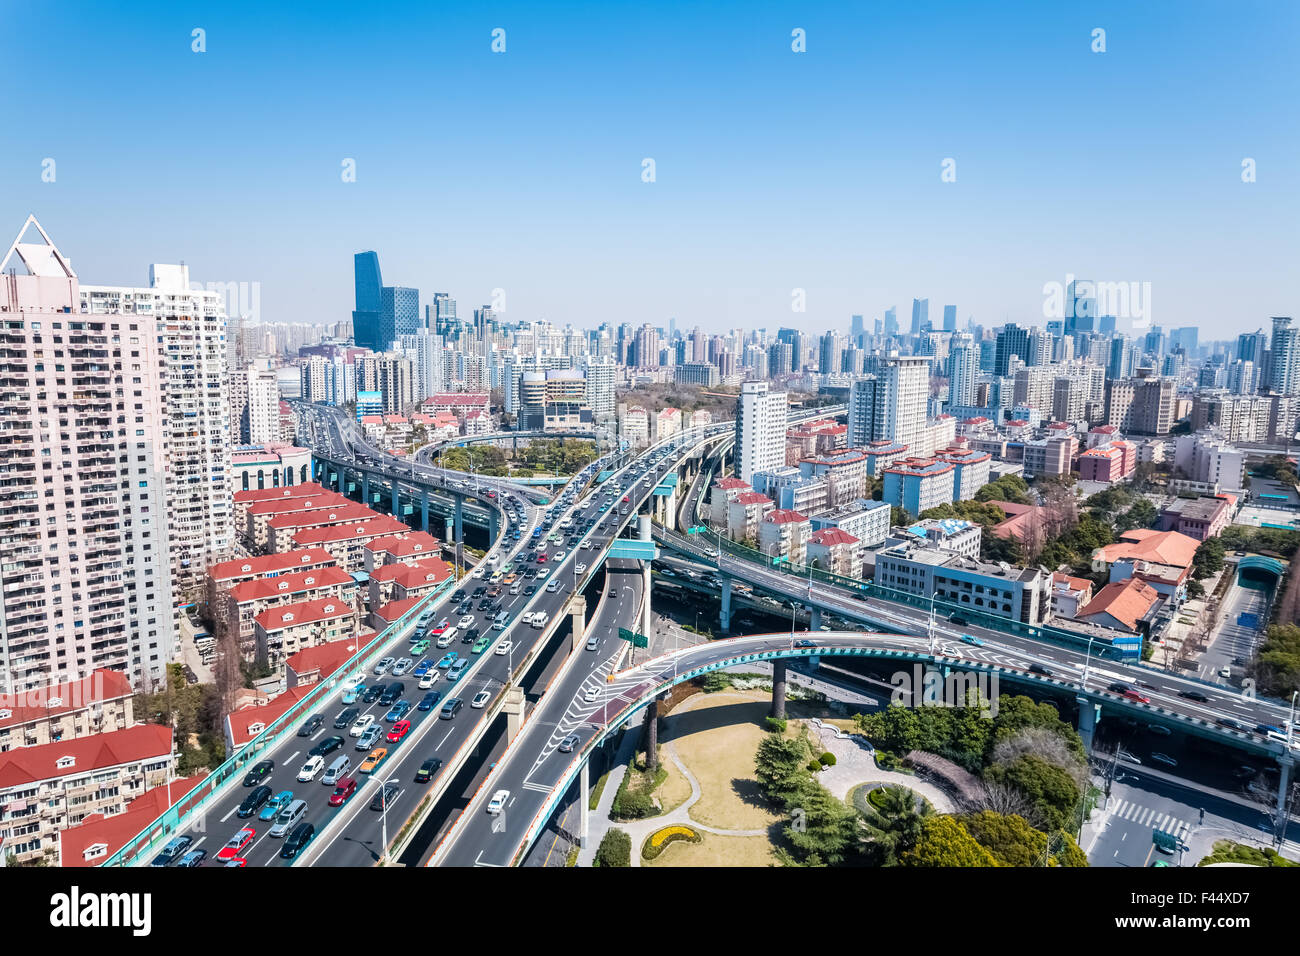 interchange of urban viaducts Stock Photo